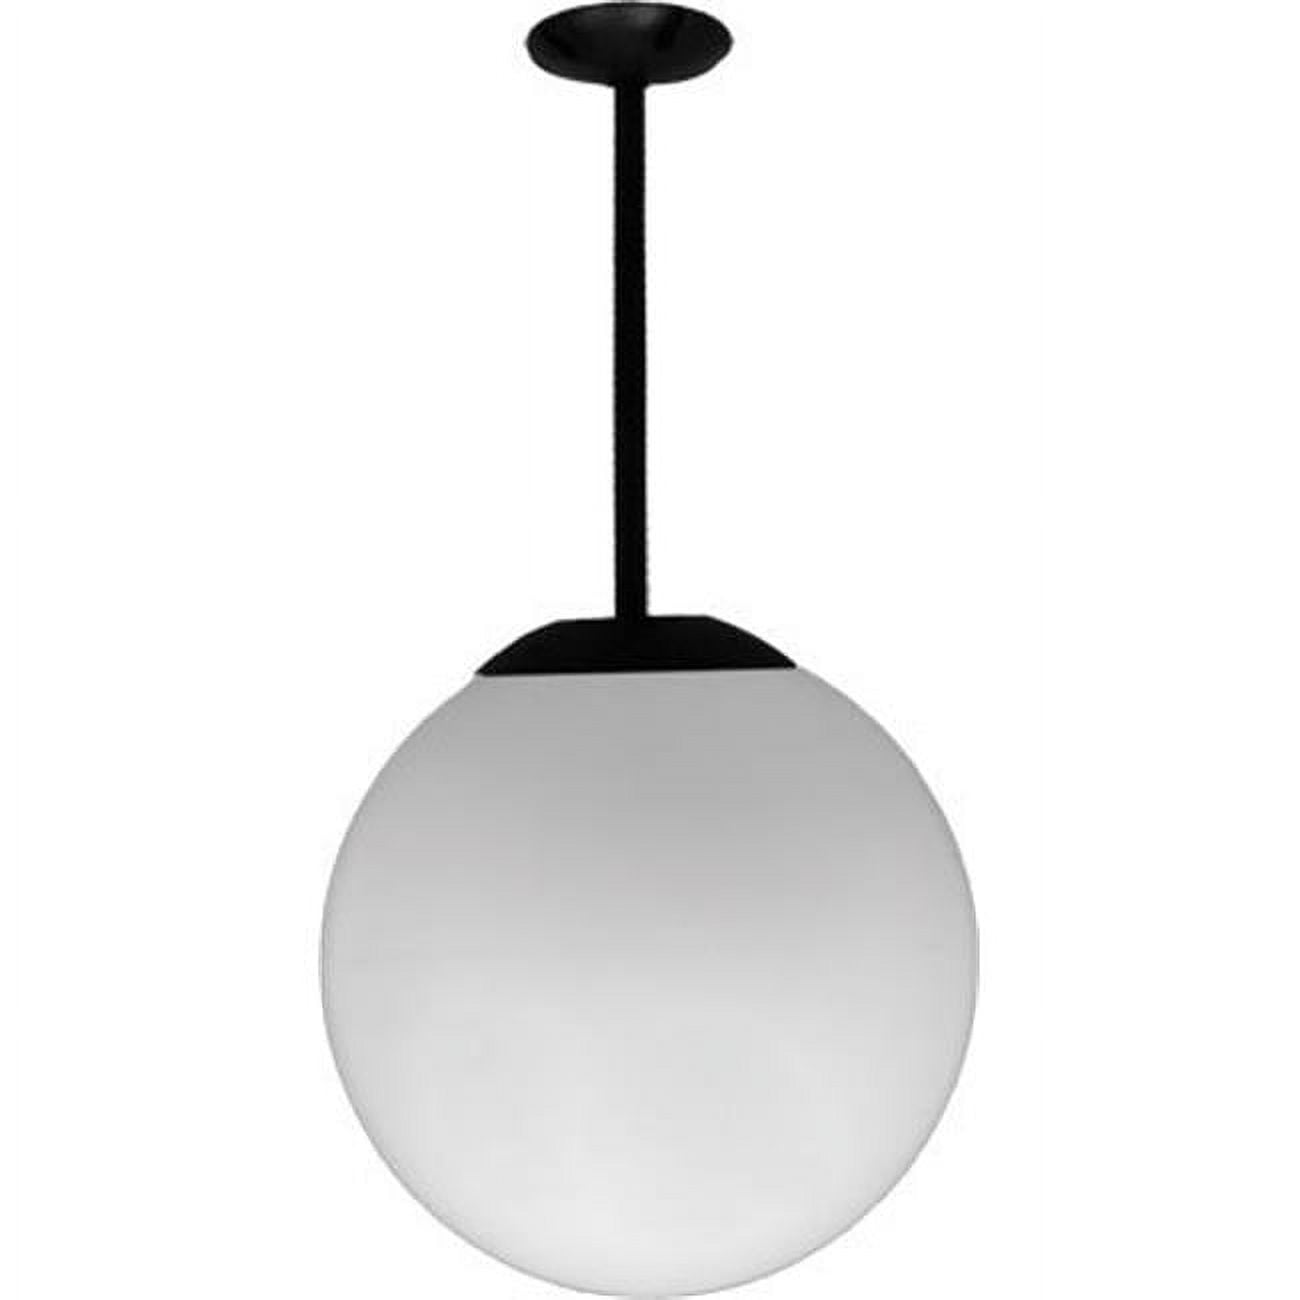 D7516-12-b 18 In. 120 V 50 Watts Ceiling Globe Fixture 12 In. Drop With Metal Halide Lamp, Black